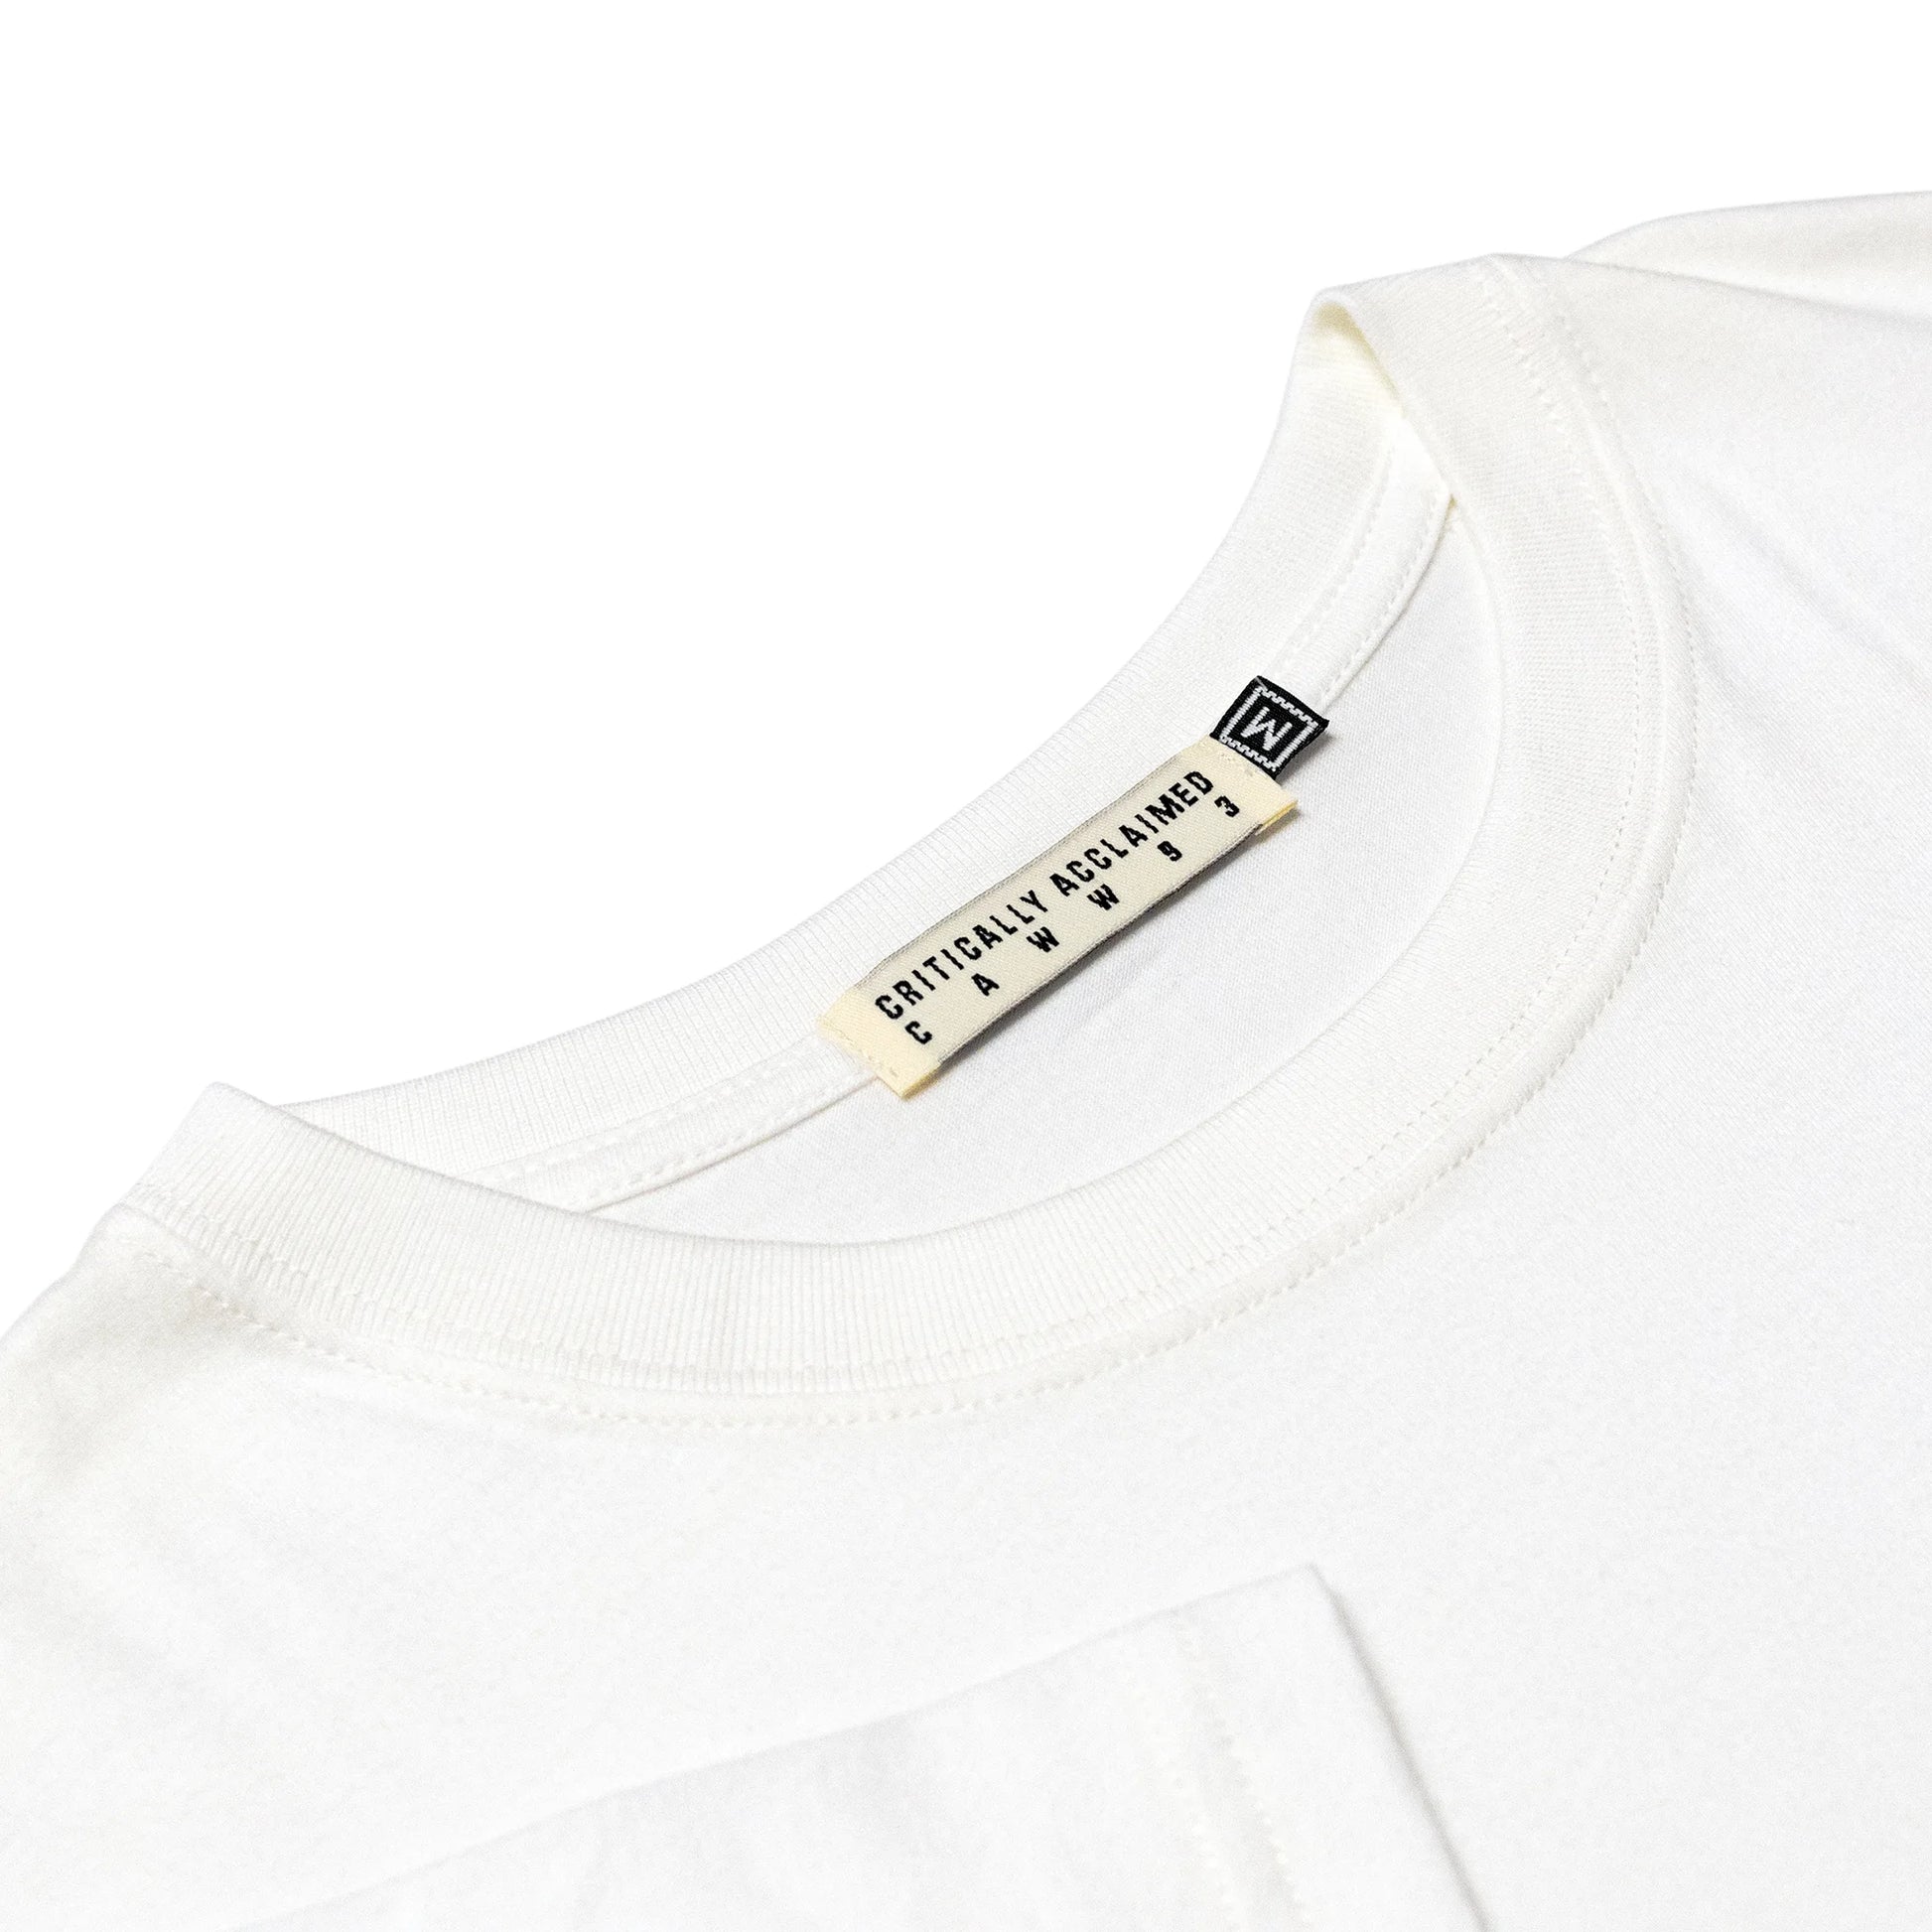 Vintage White Graphic T-Shirt Collar Close-Up